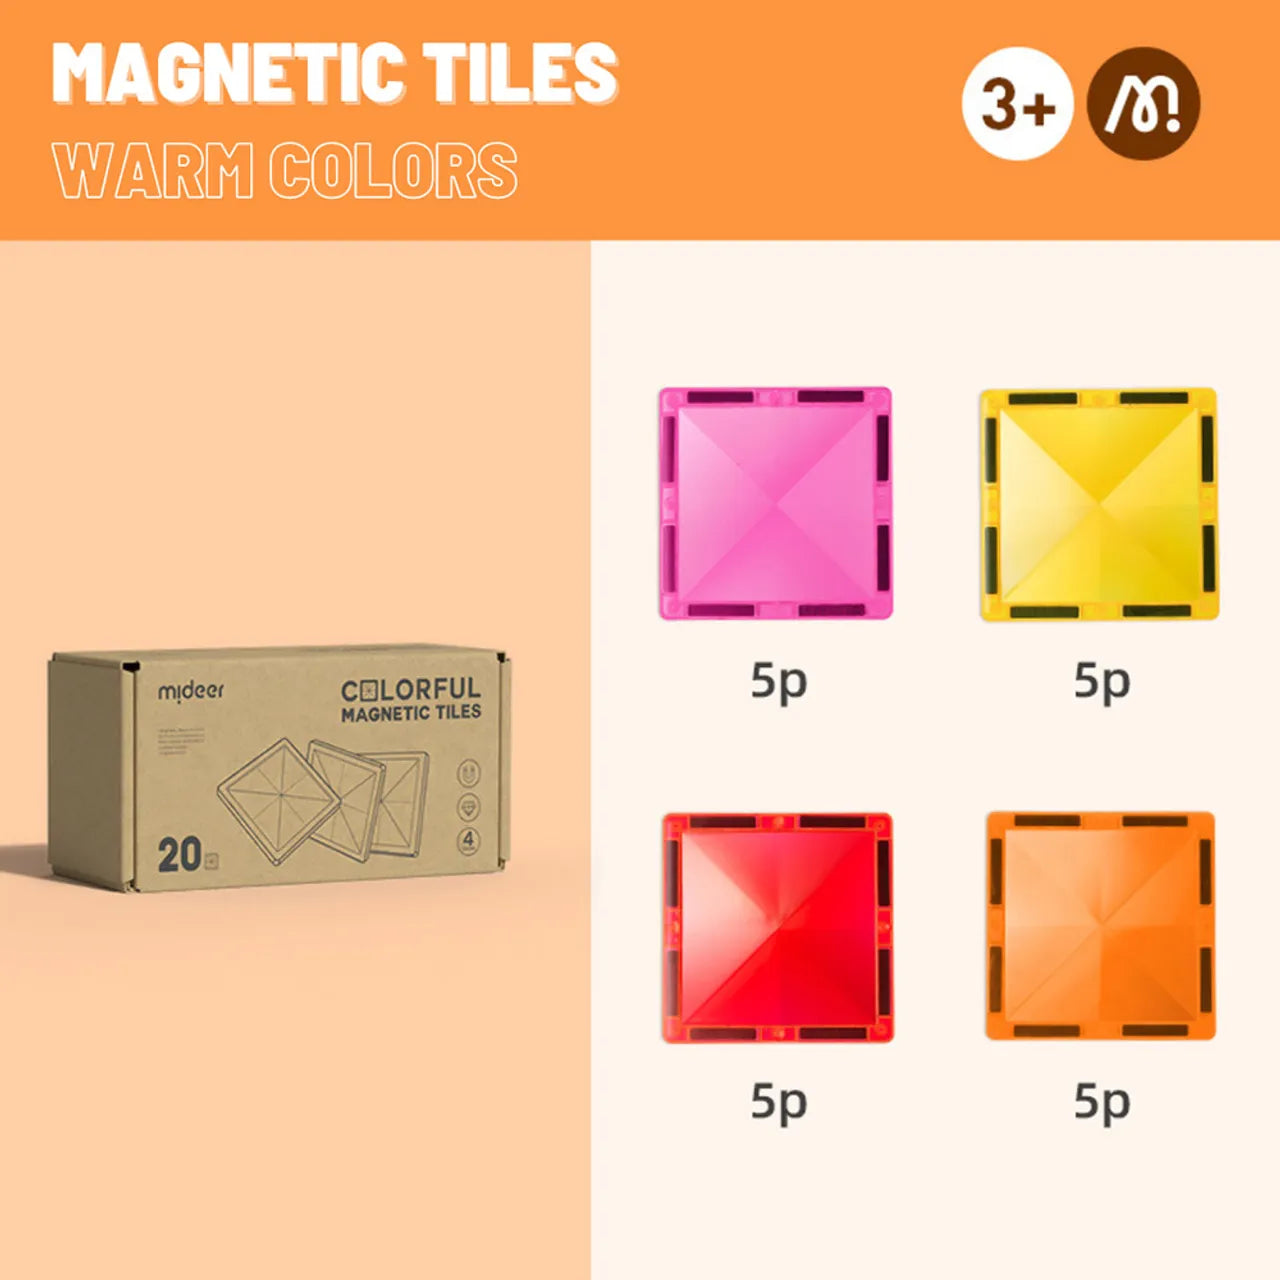 Mideer Colorful Magnetic Tiles 20pcs - Warm Color